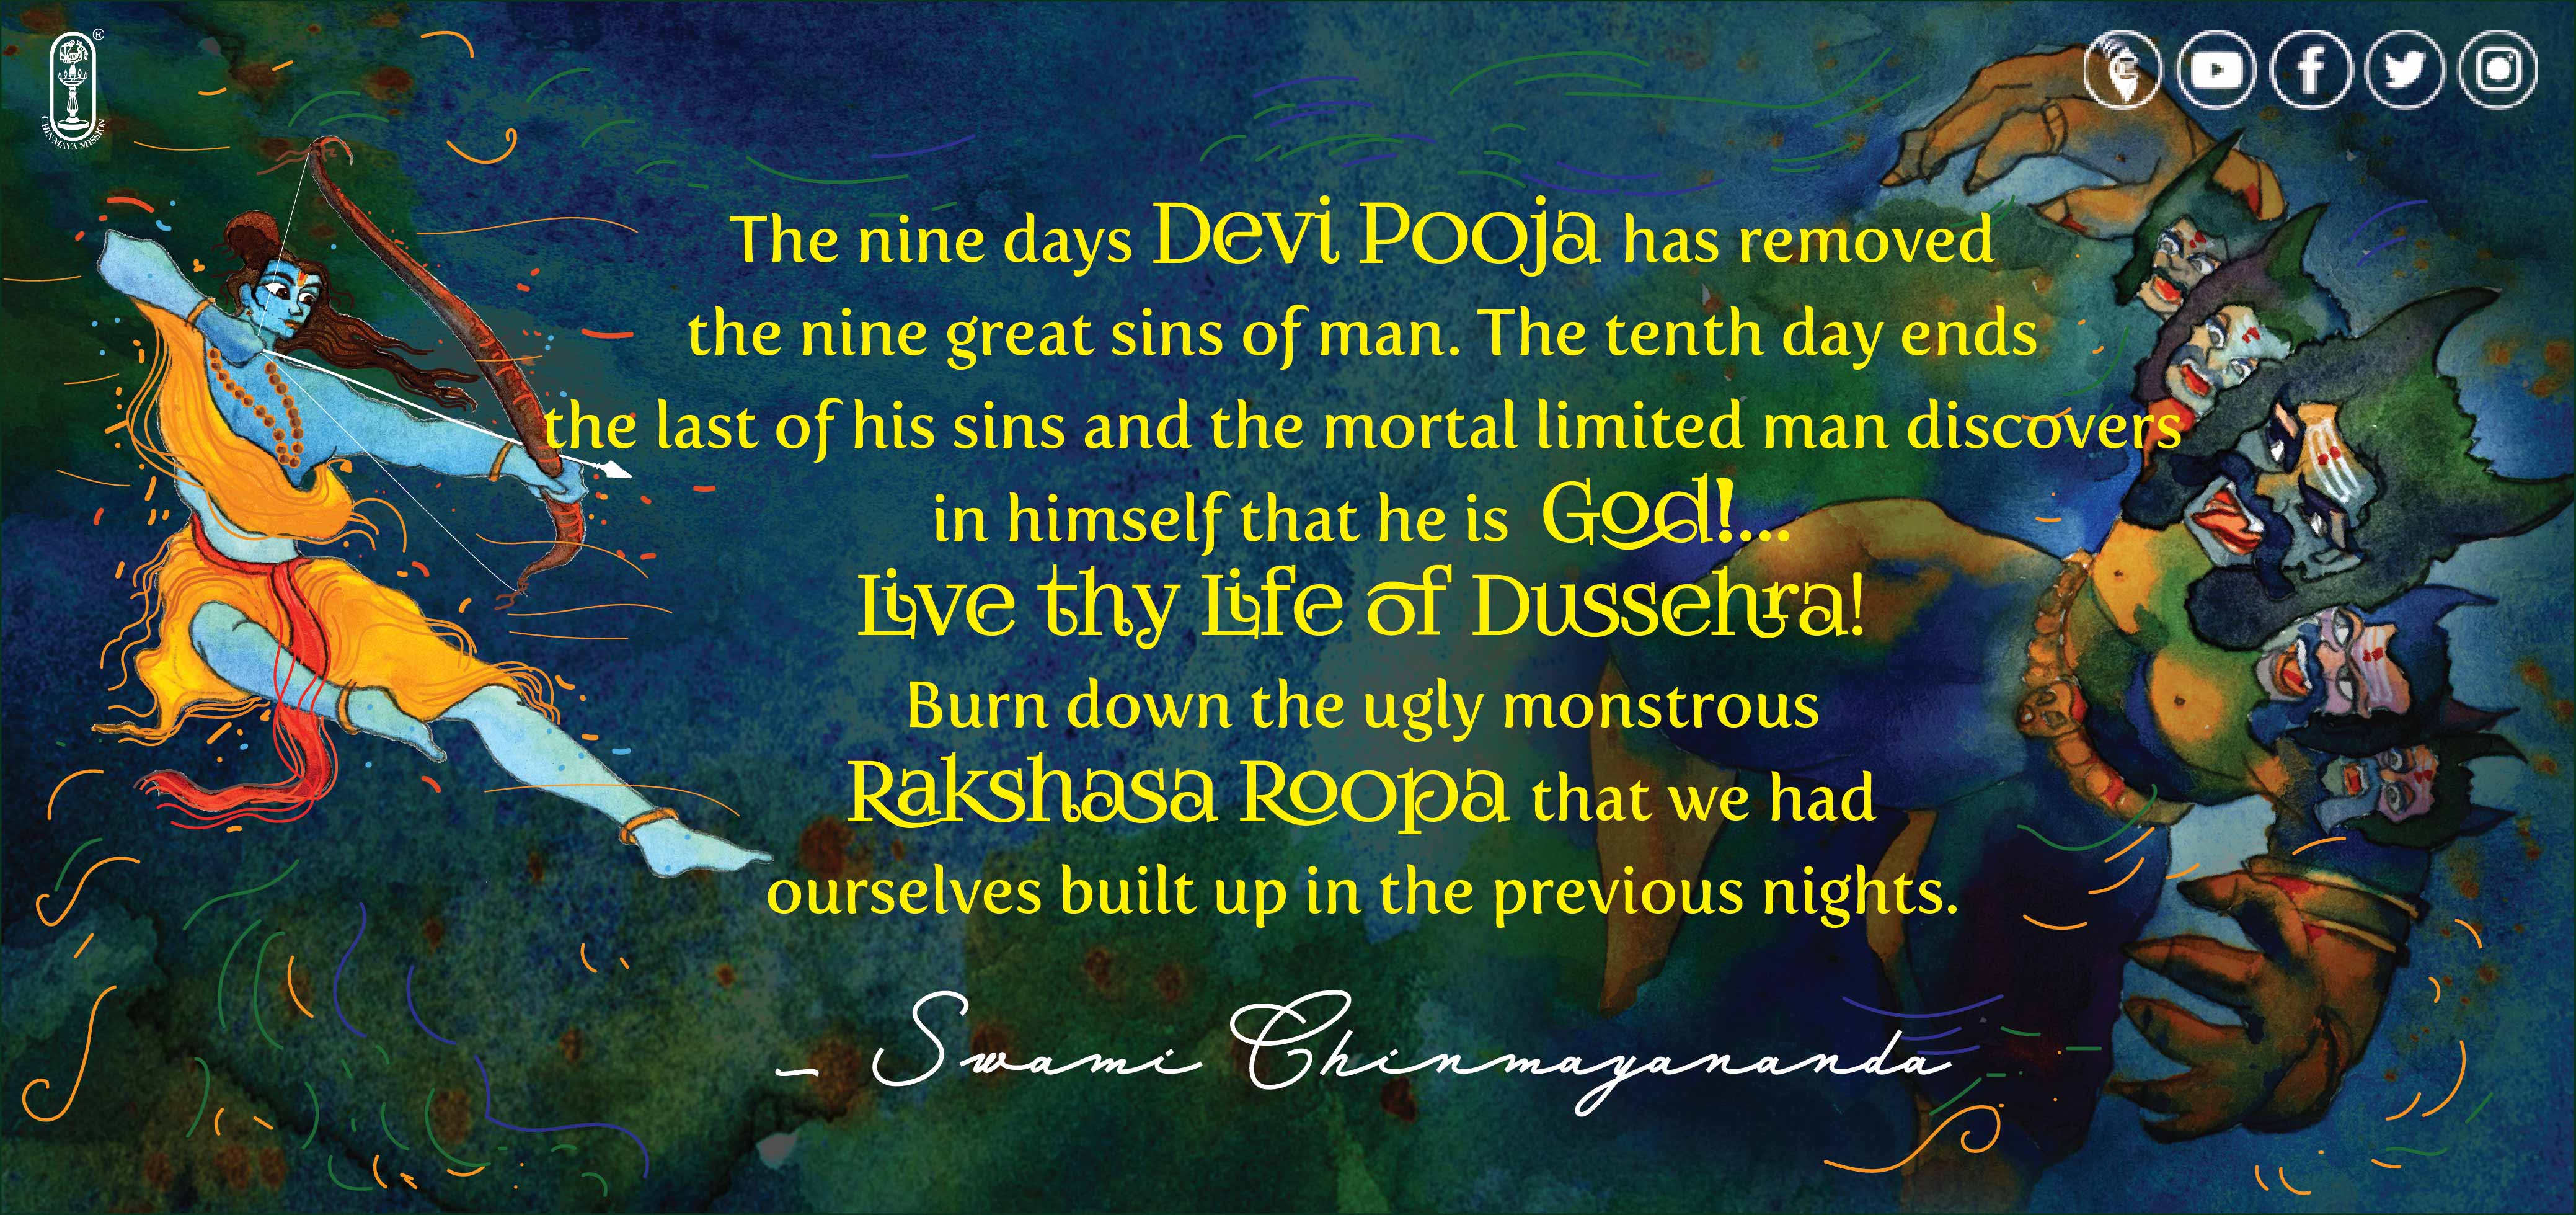 Dussehra Message of Swami Chinmayananda